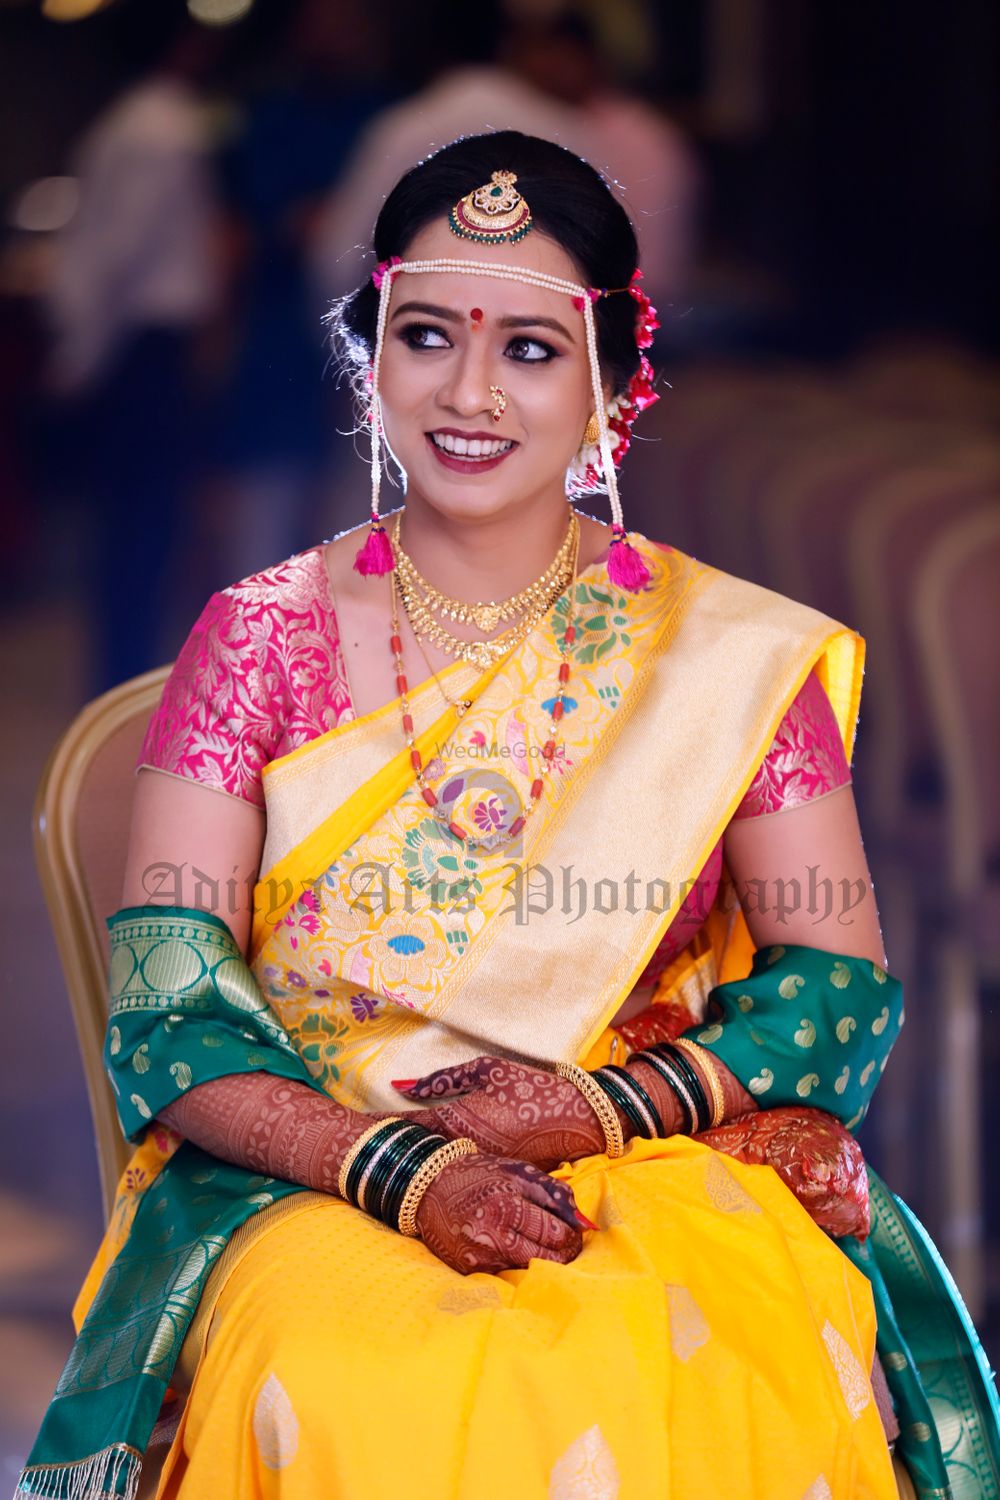 Photo From Bride - By Aditya Art's